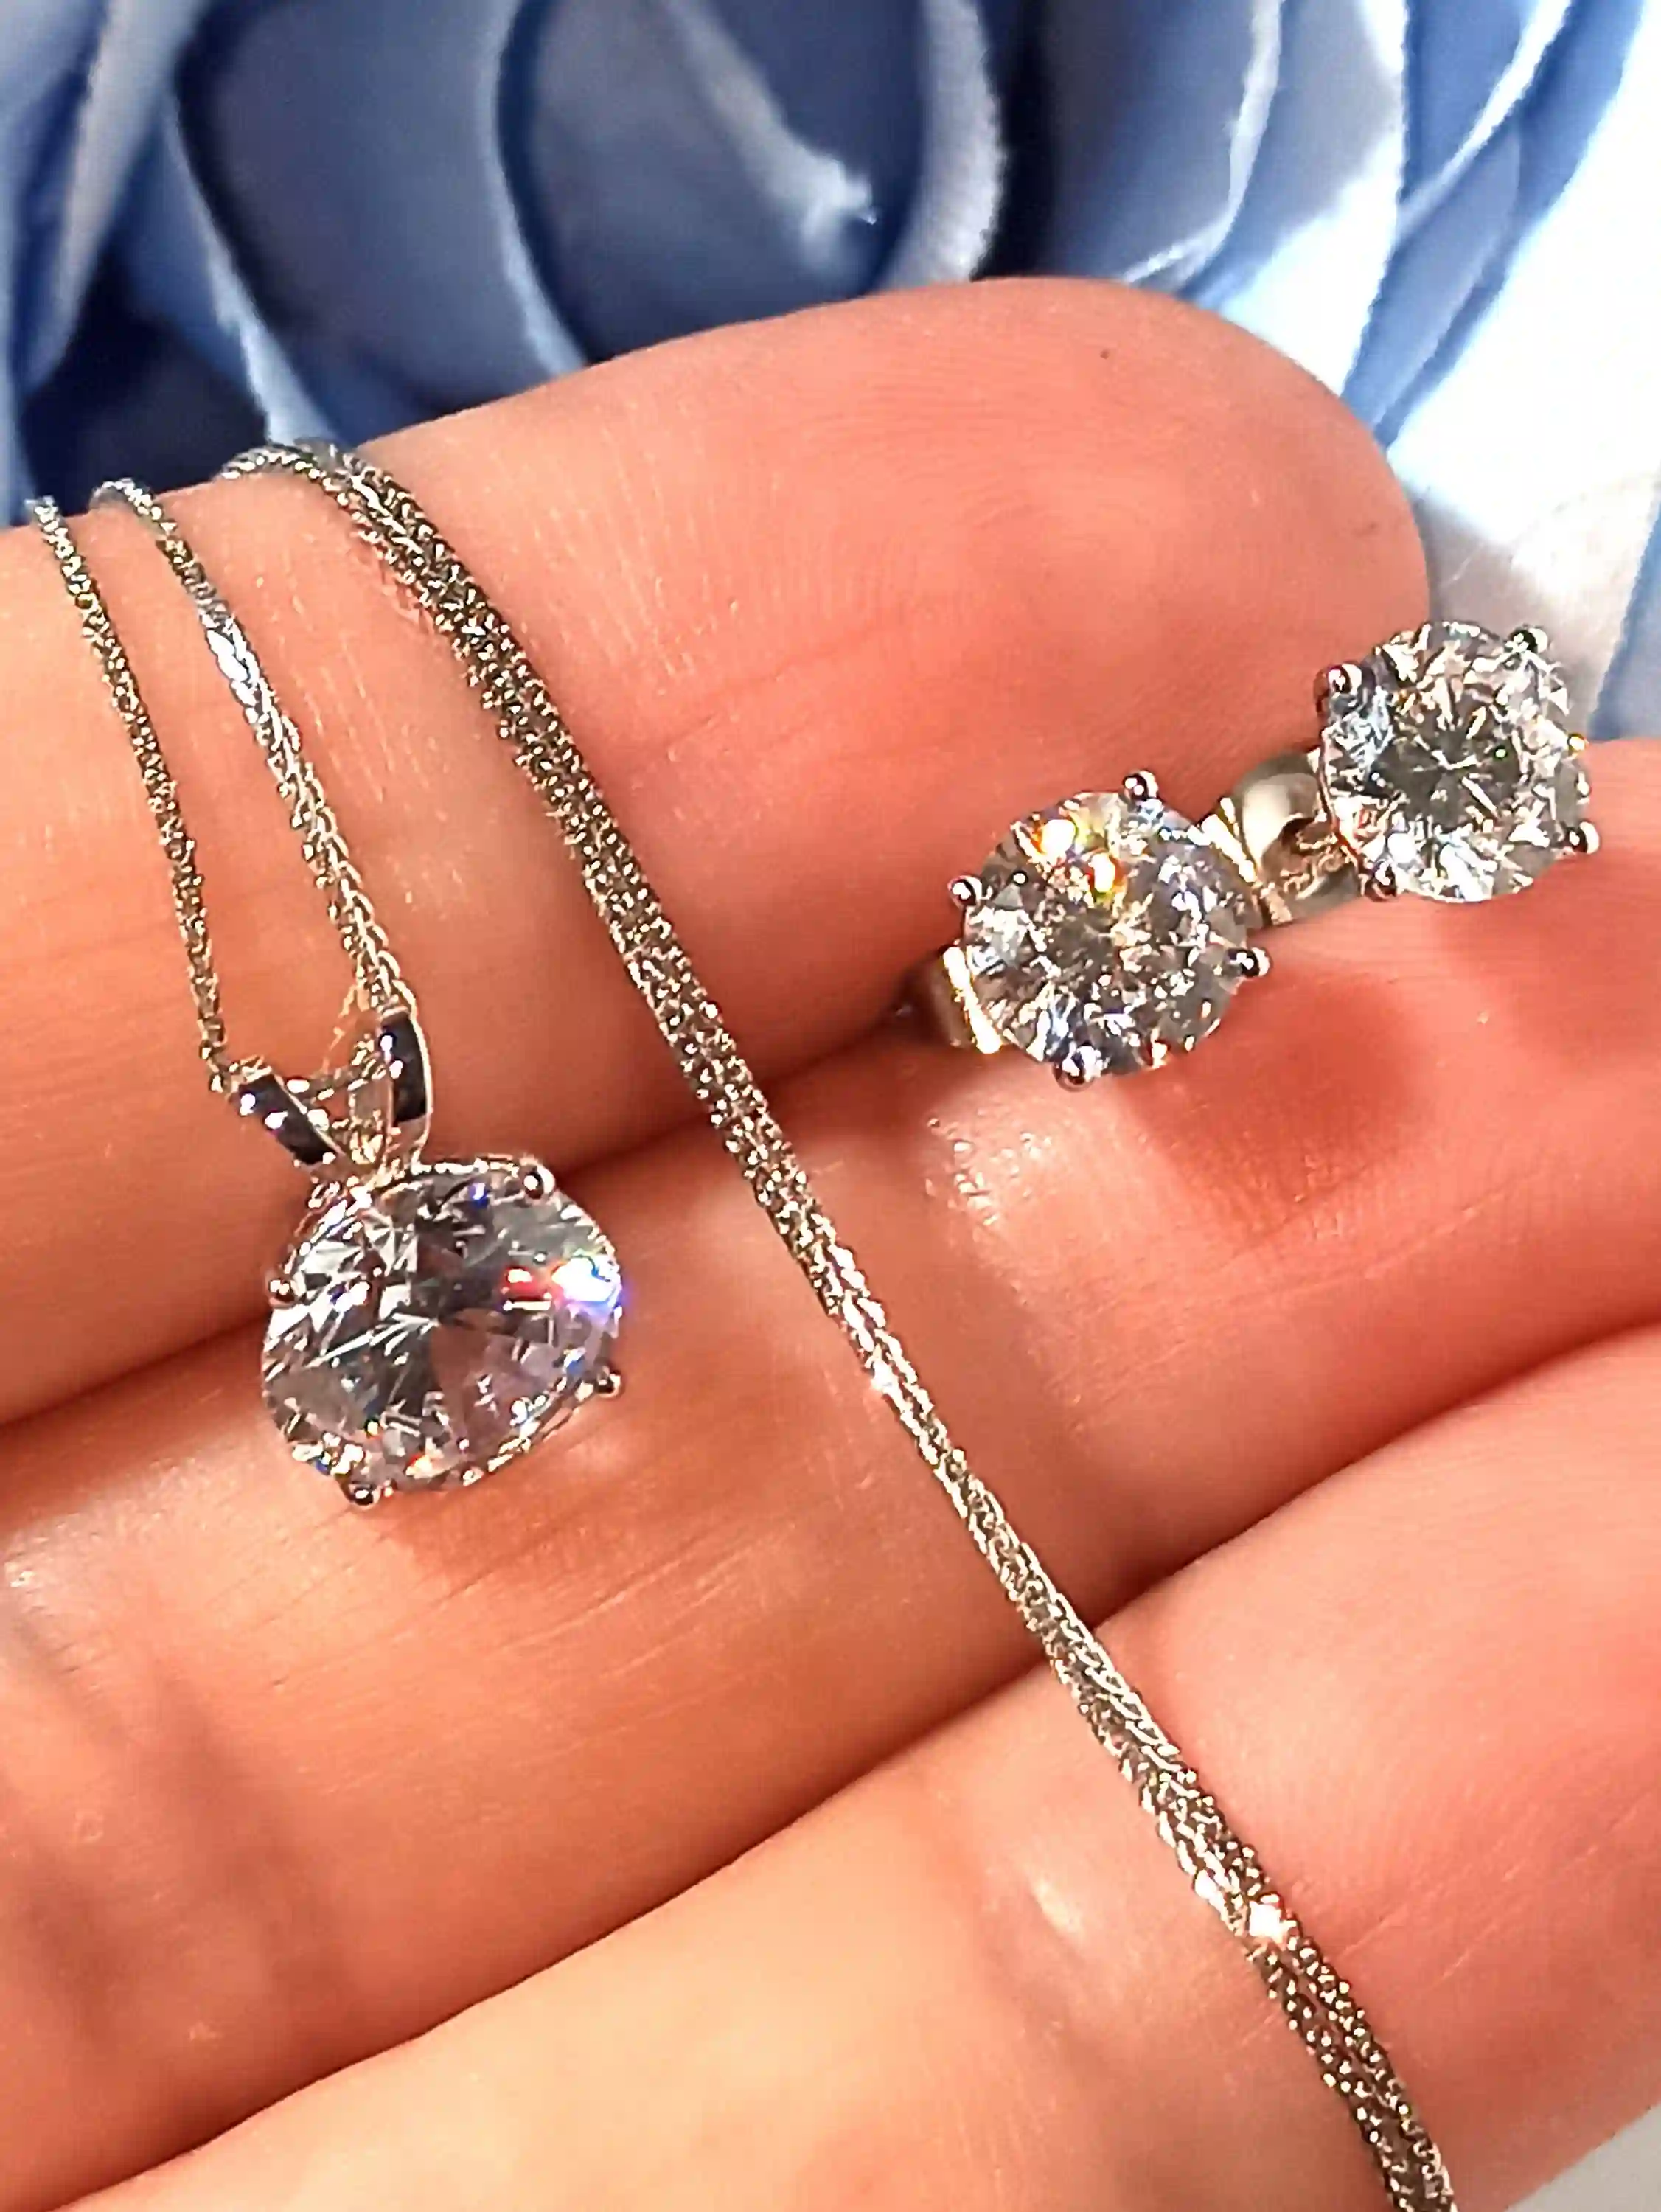 Diamond Solitaire Pendant Necklace - 1.5ct - 18K SOLID White Gold - Diamond Necklace - 18